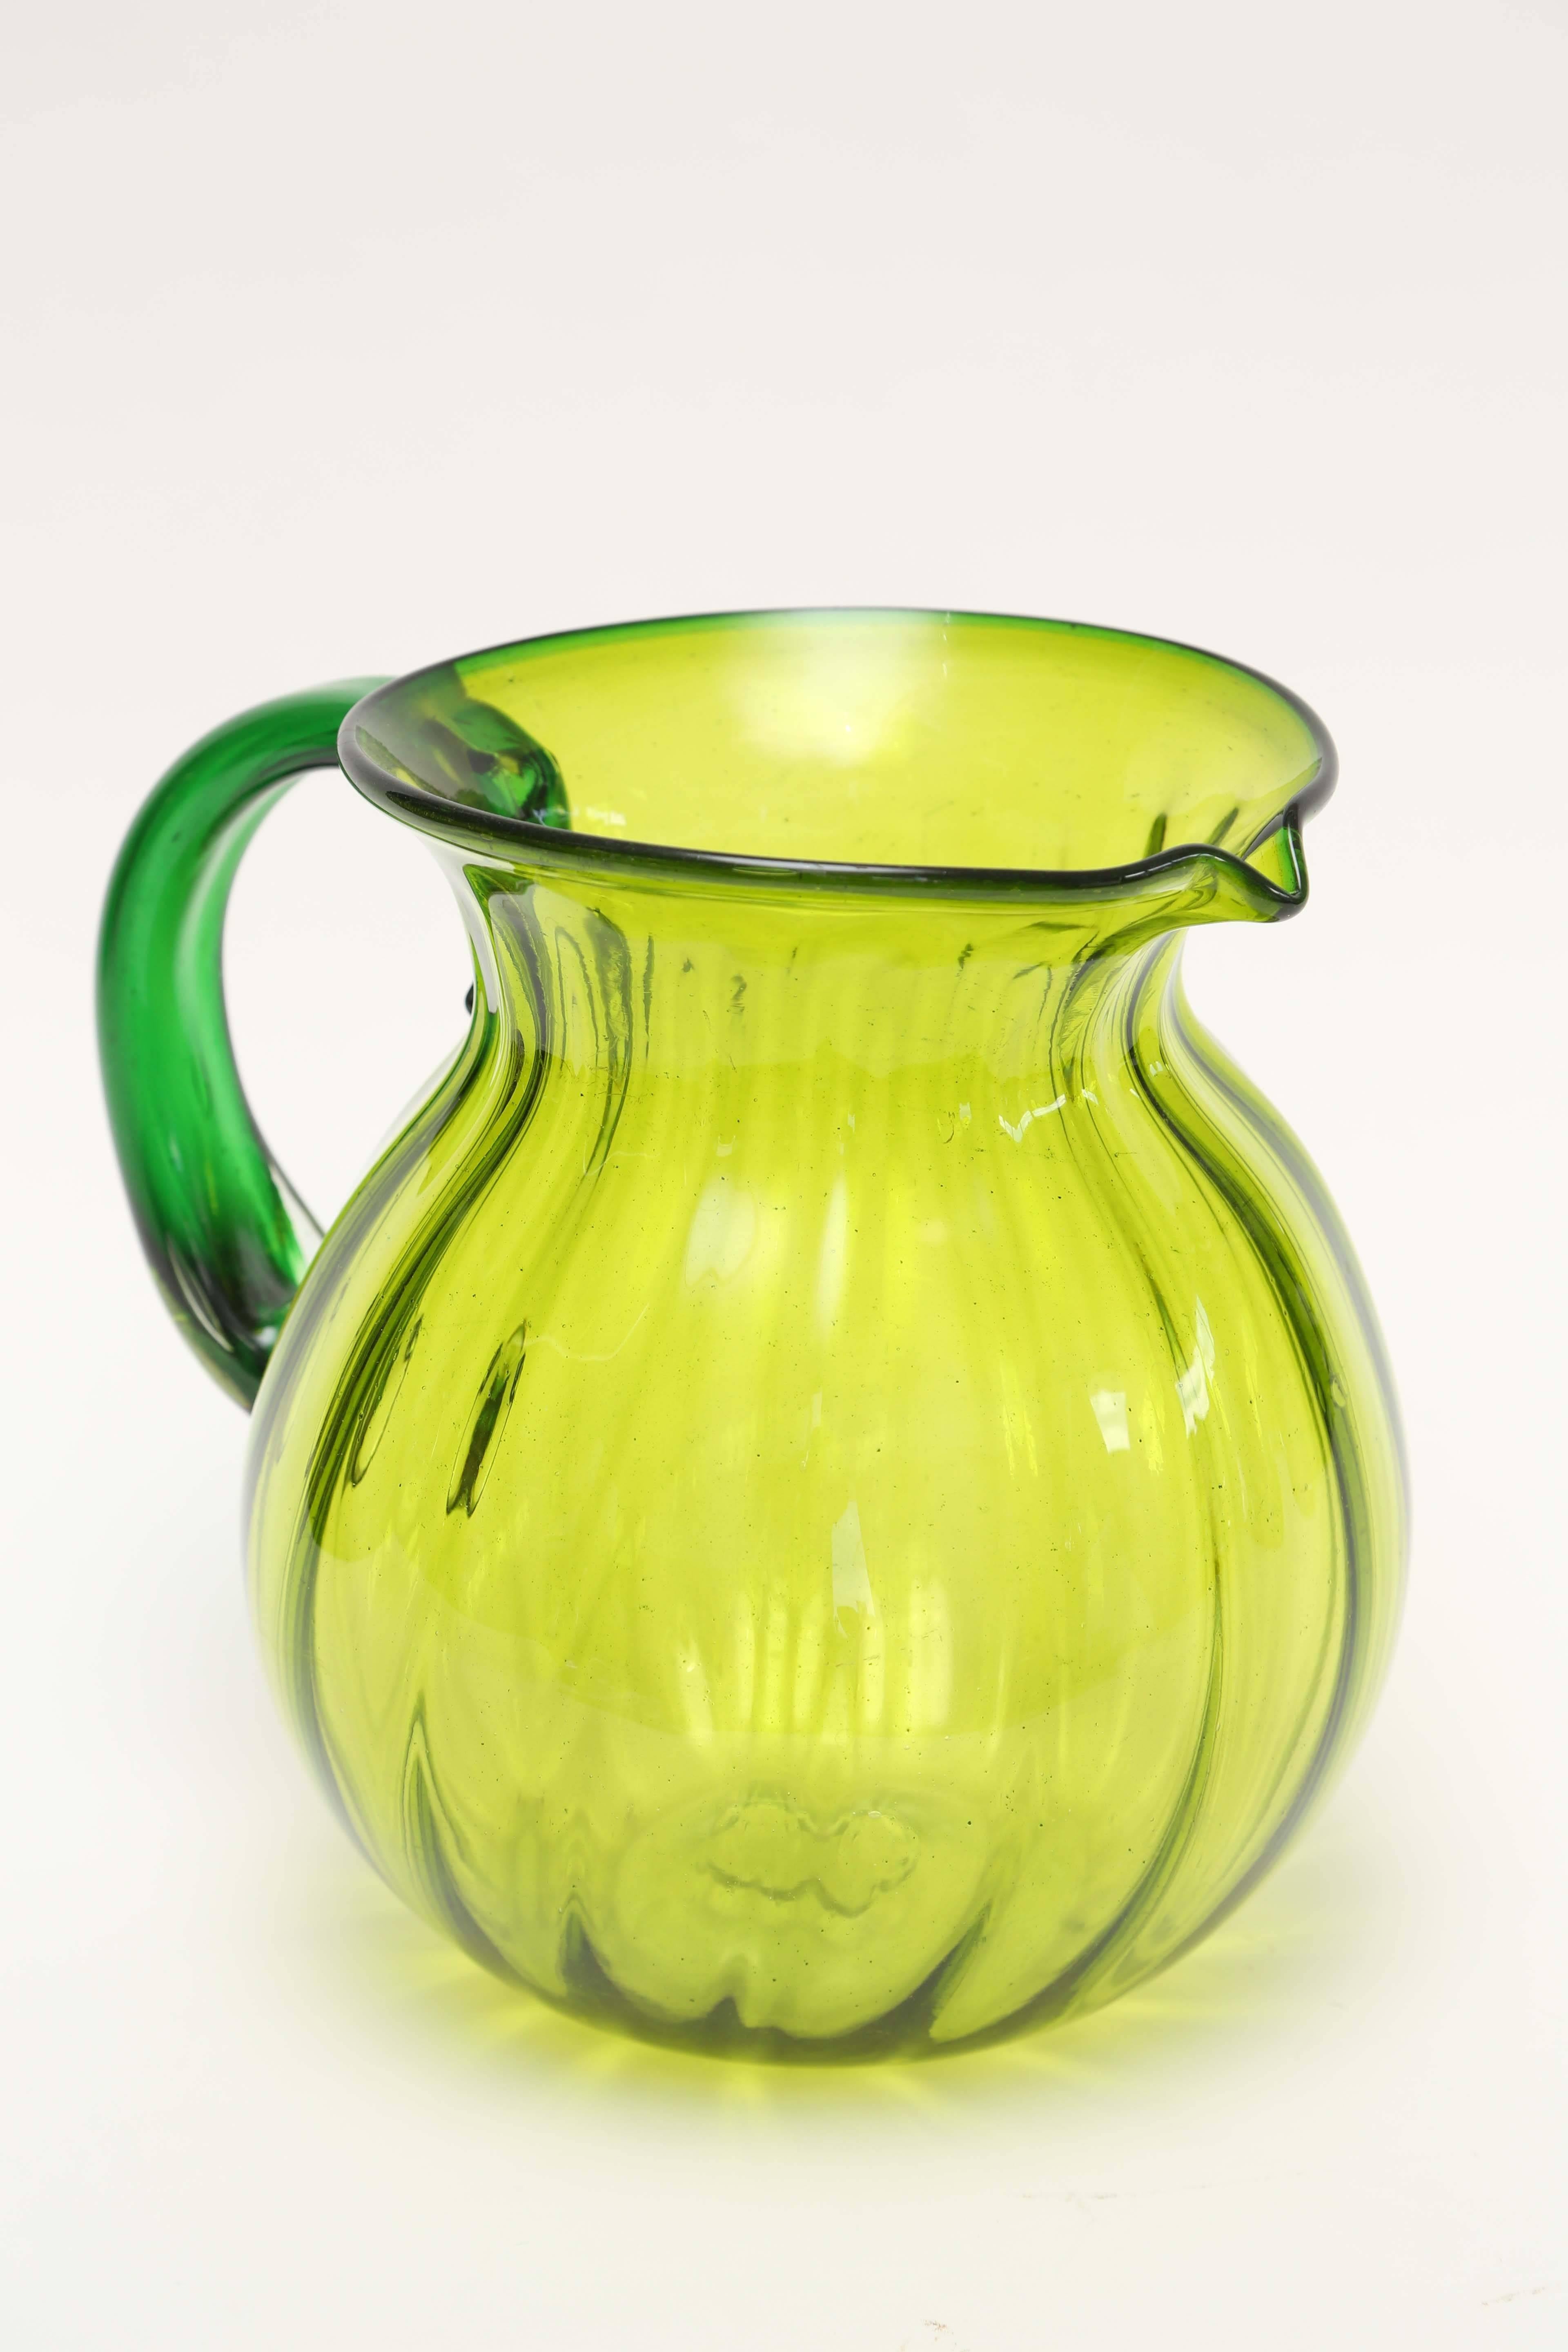 Wonderful oversized blenko glass pitcher, 1950s, USA.